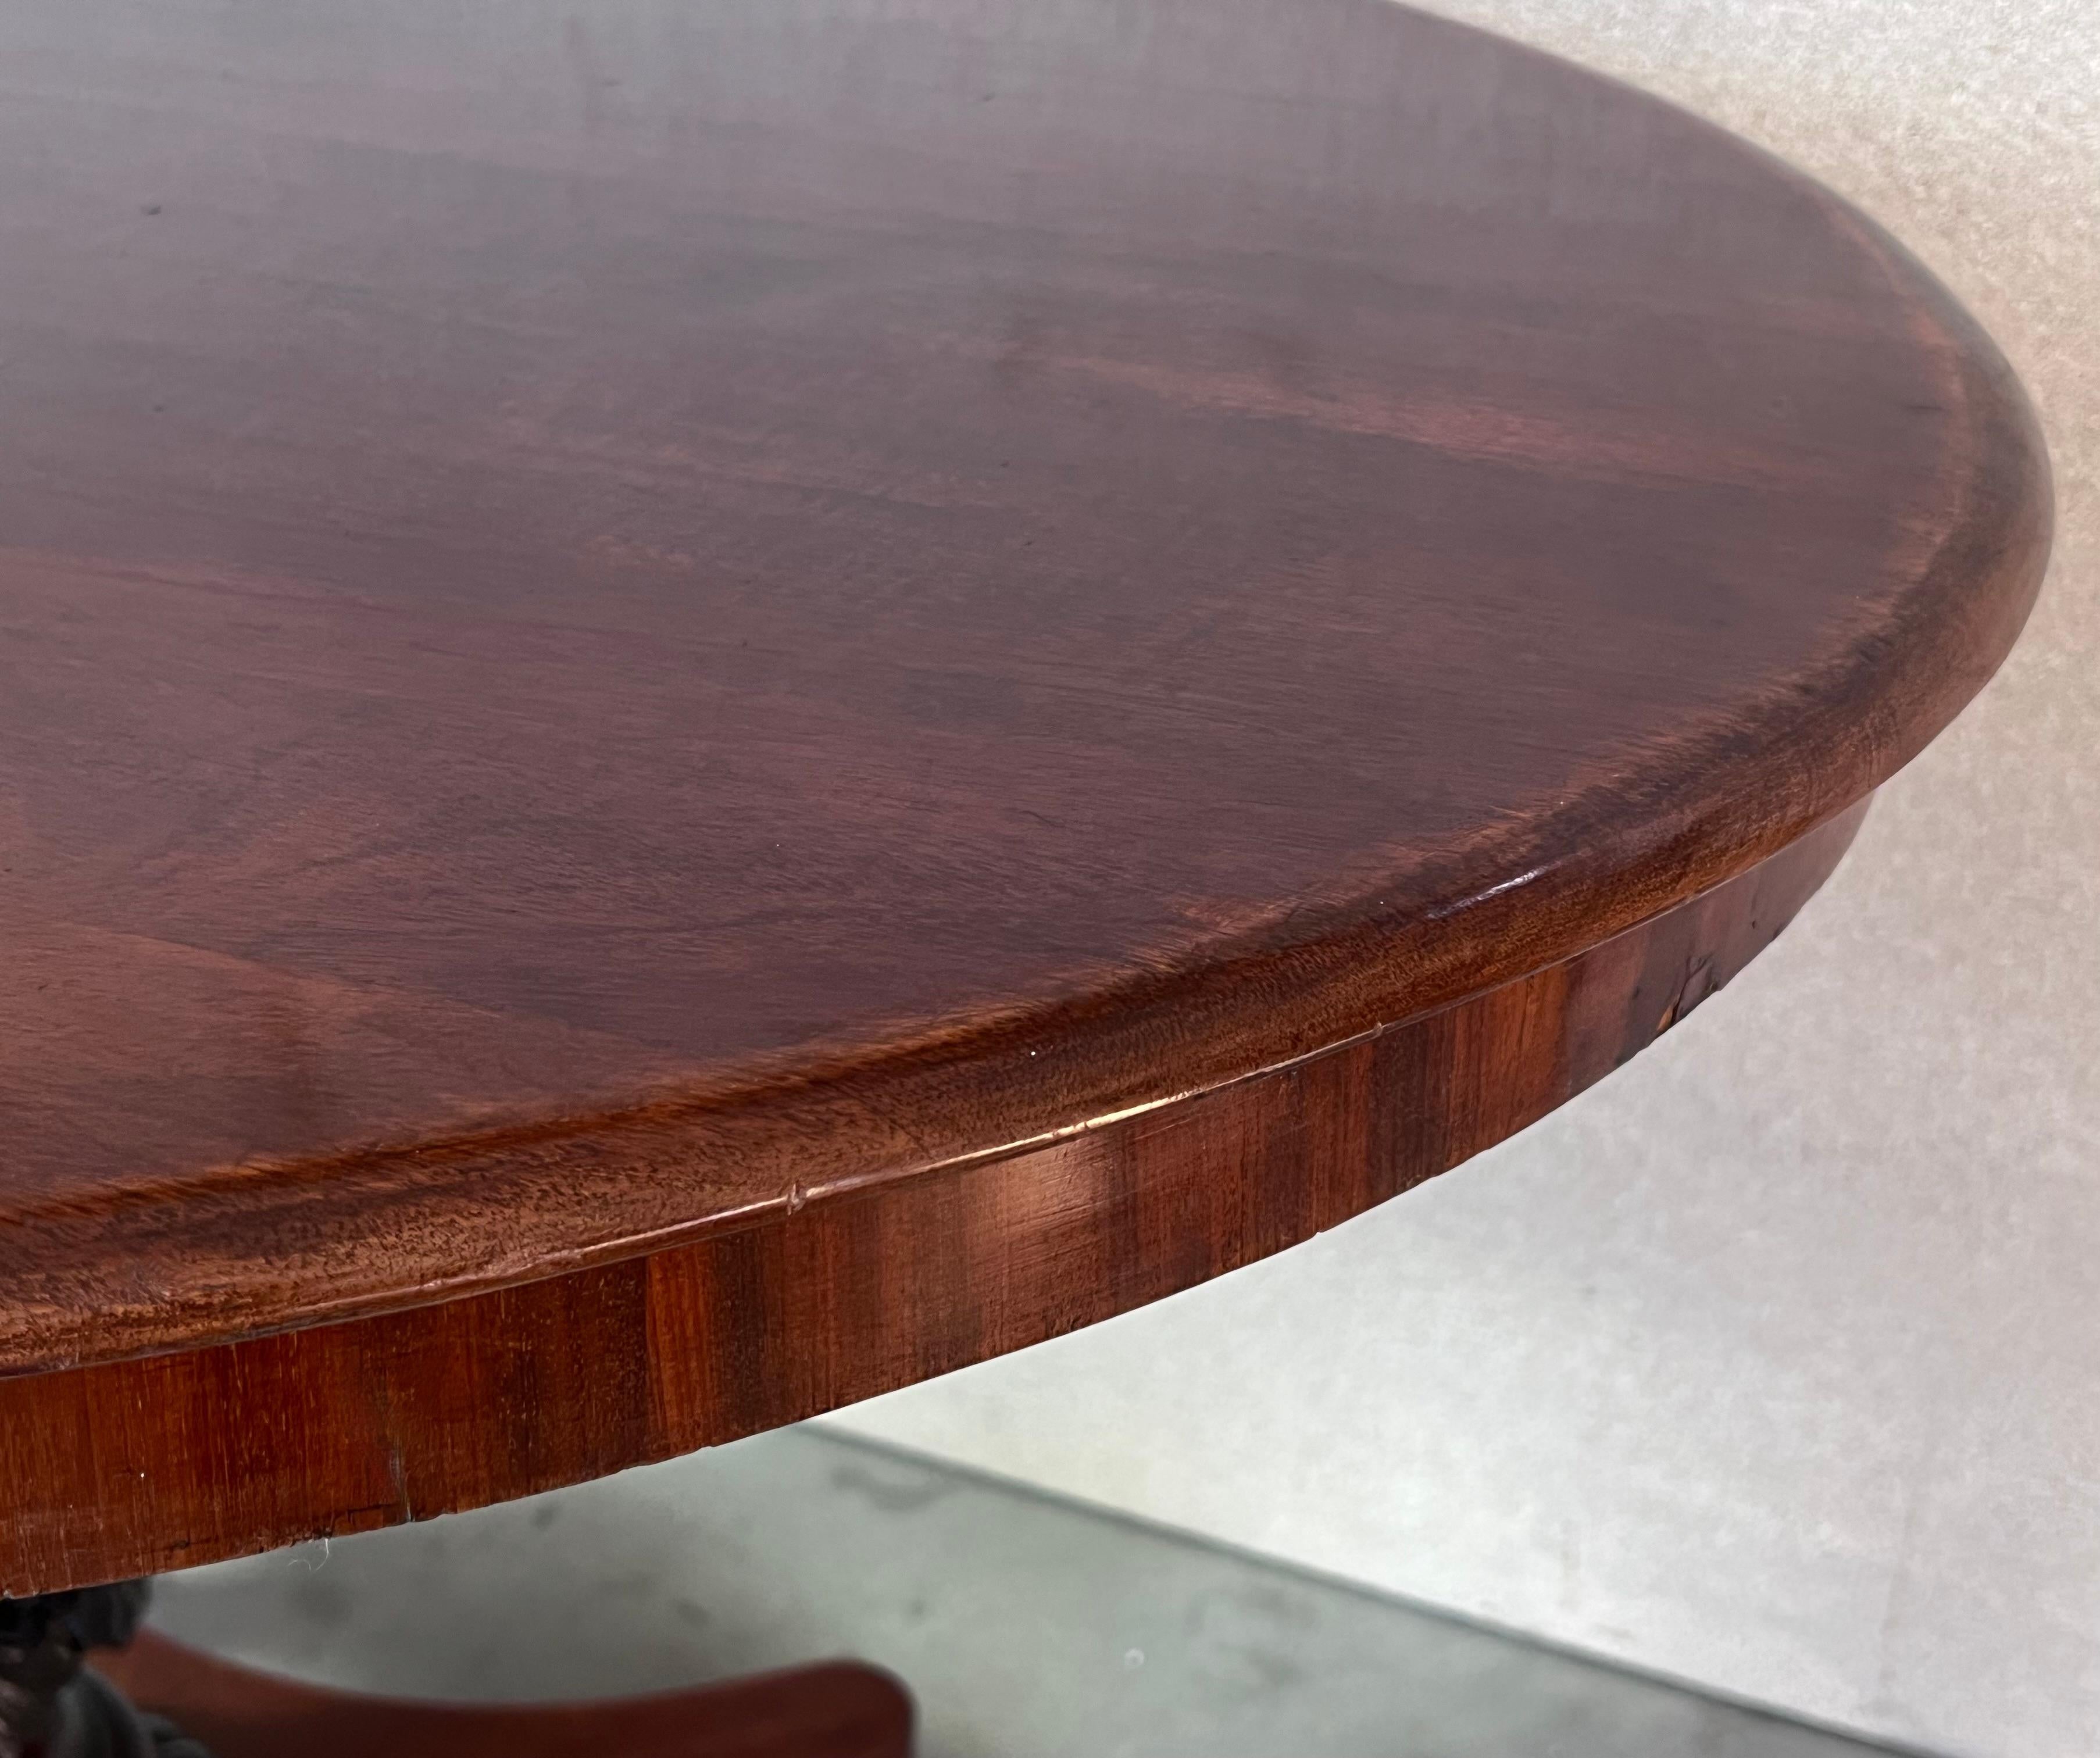 Ovaler Mahagoni-Tisch, um das 19. Jahrhundert (Holz) im Angebot